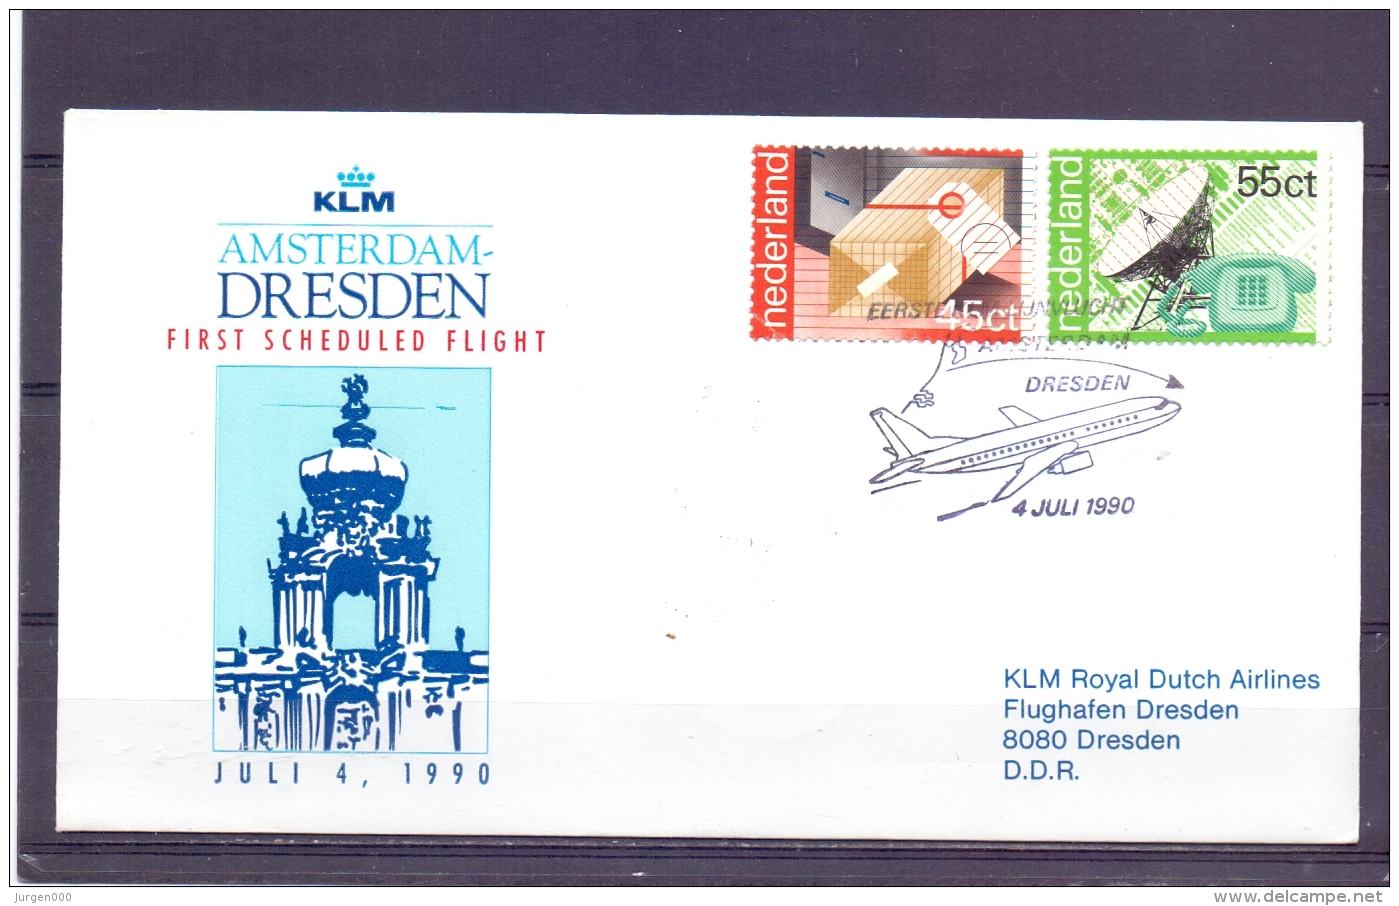 Nederland - KLM - First Scheduled Flight Amsterdam  - Dresden - 4/7/1990  (RM13030) - Avions